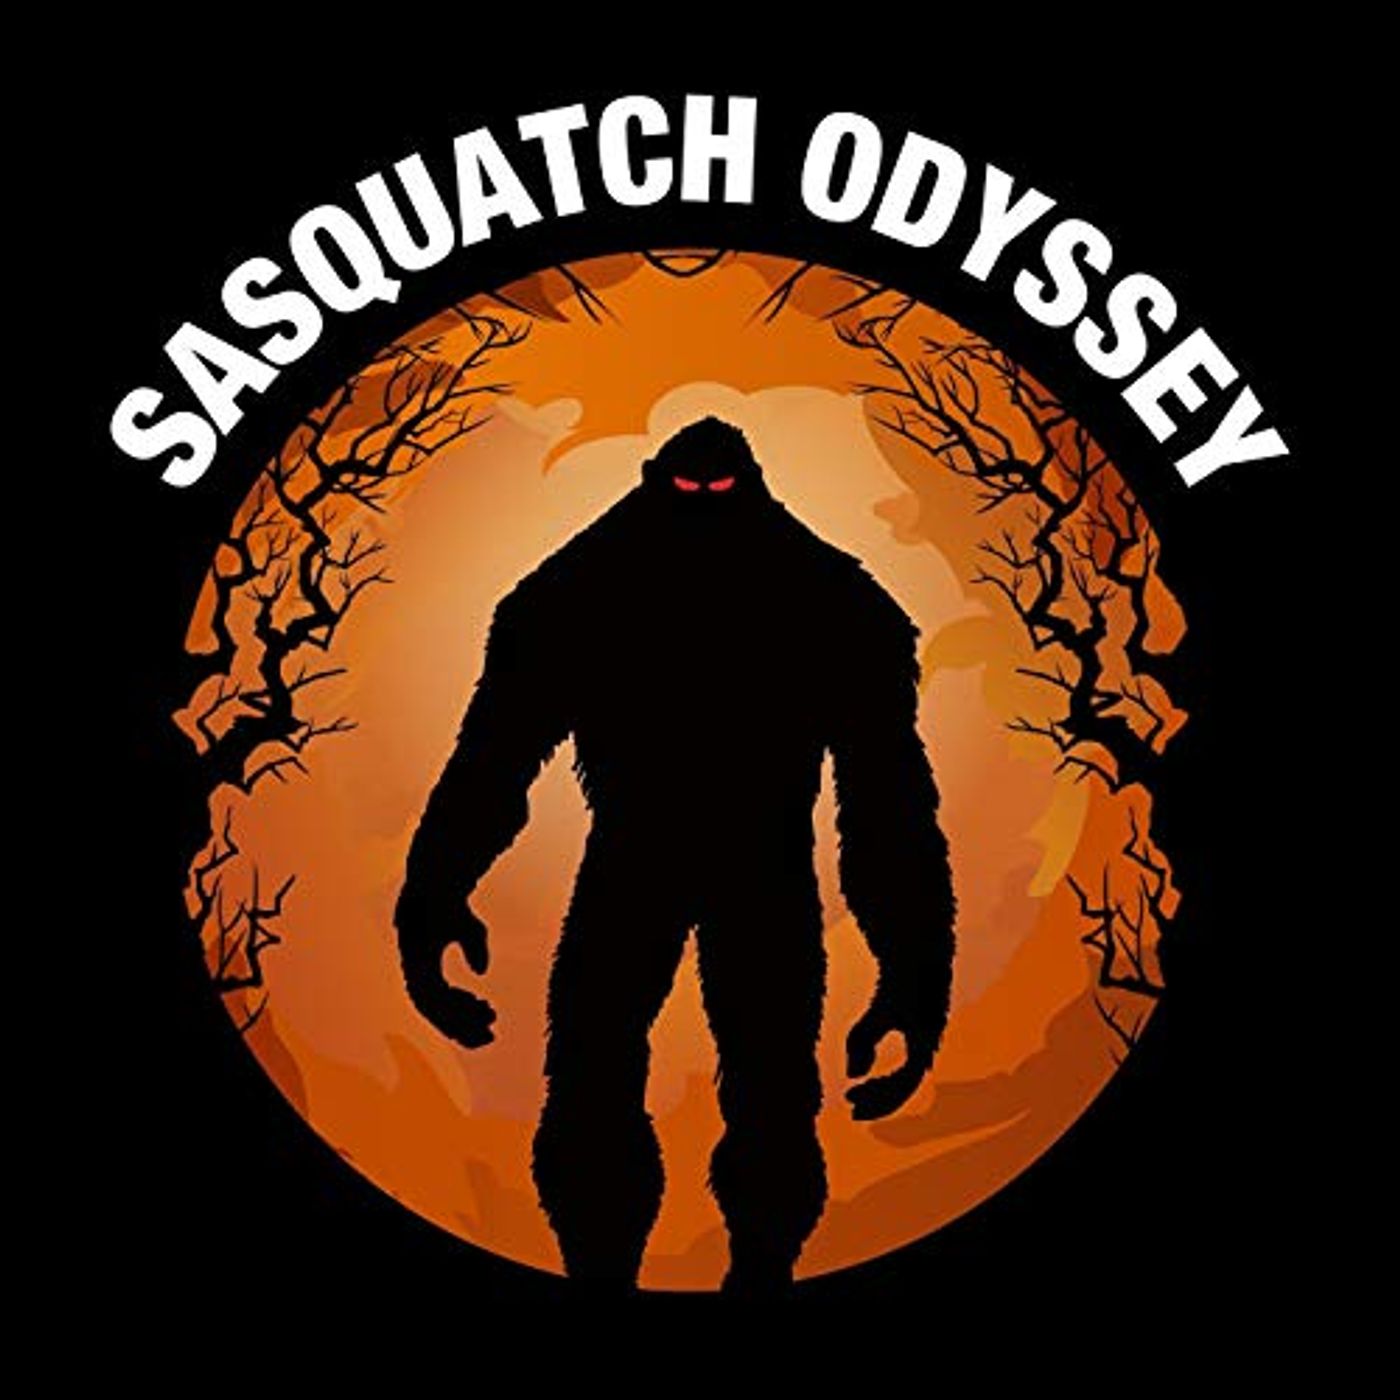 Ep. 109: Sasquatch Odyssey with Brian King-Sharp